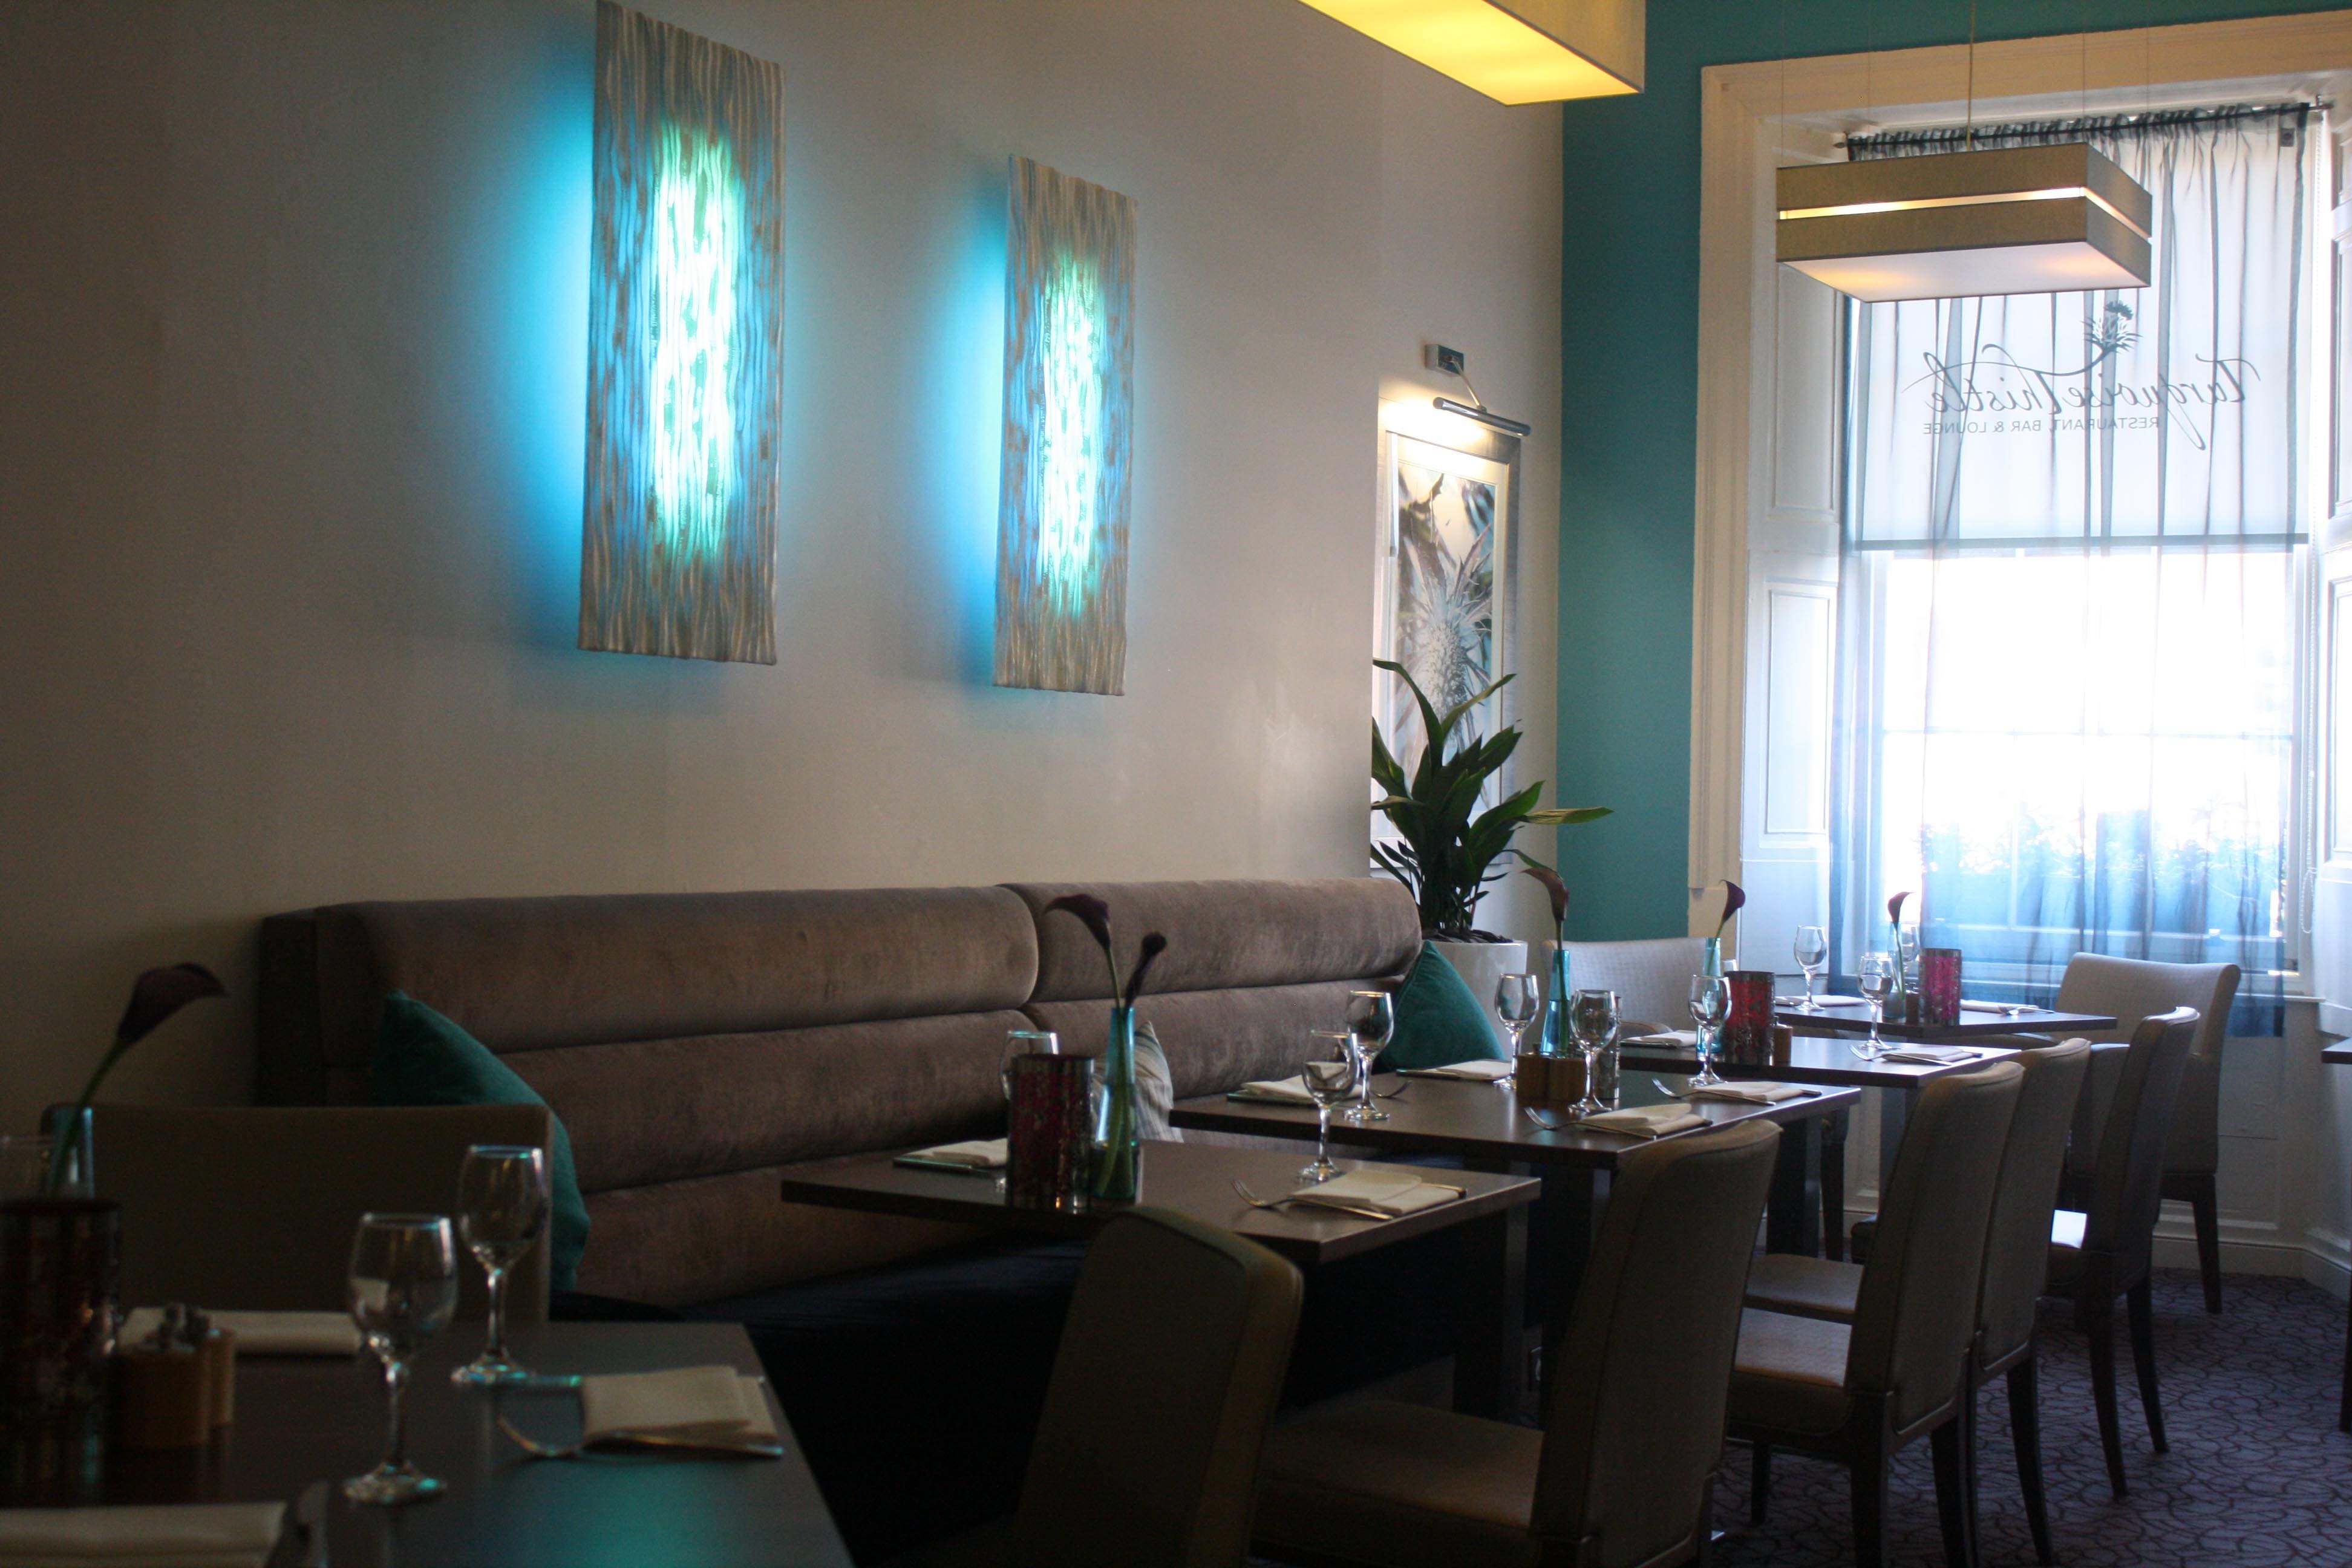 The Turquoise Thistle - Hotel Indigo | 51-59 York Place, New Town, Edinburgh EH1 3JD | +44 131 556 5577